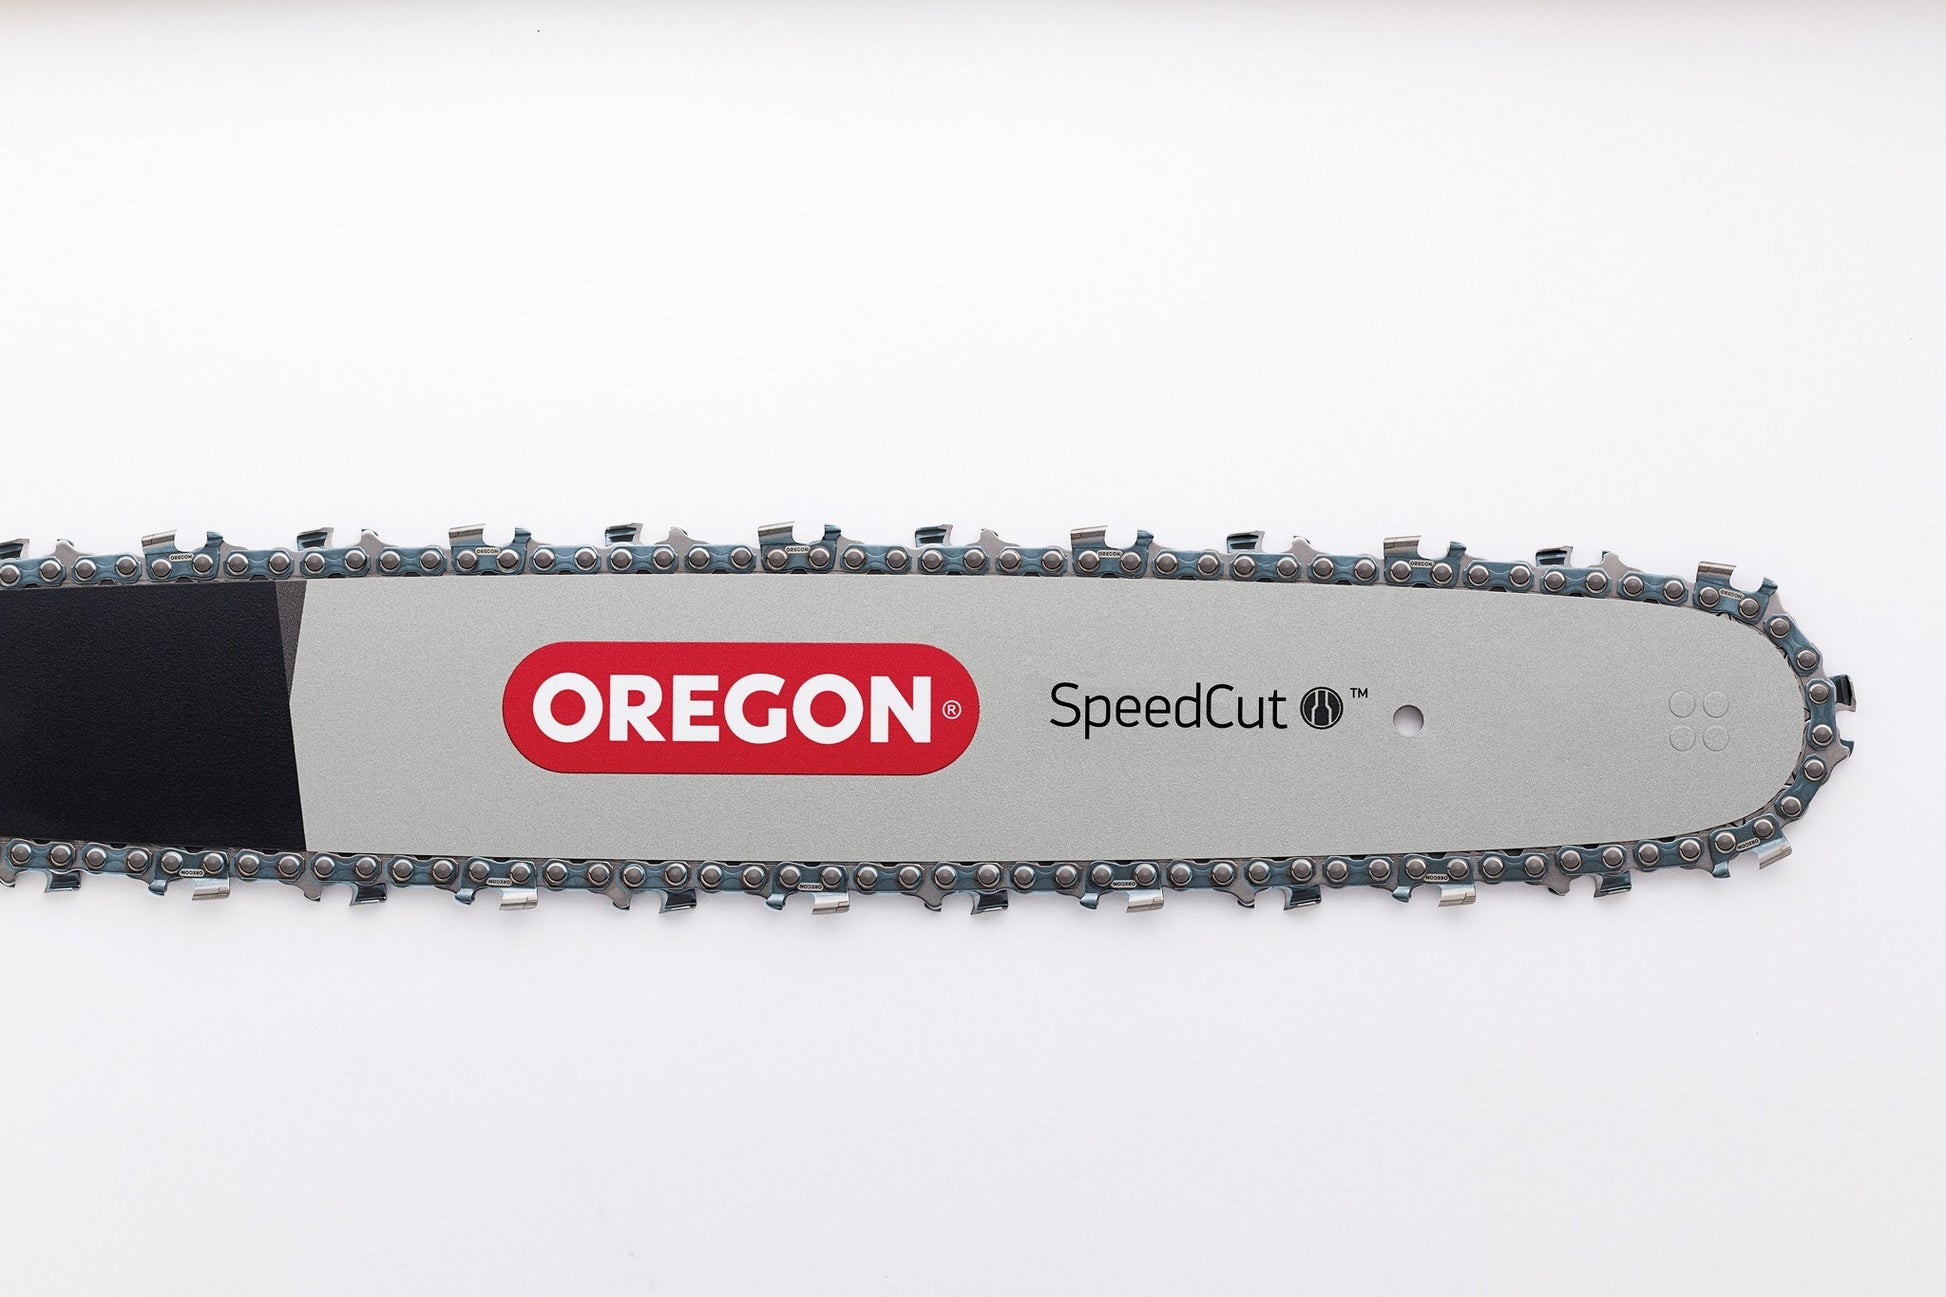 180TXLBA074 - Oregon 18" SpeedCut Chainsaw Guide Bar - NewSawChains